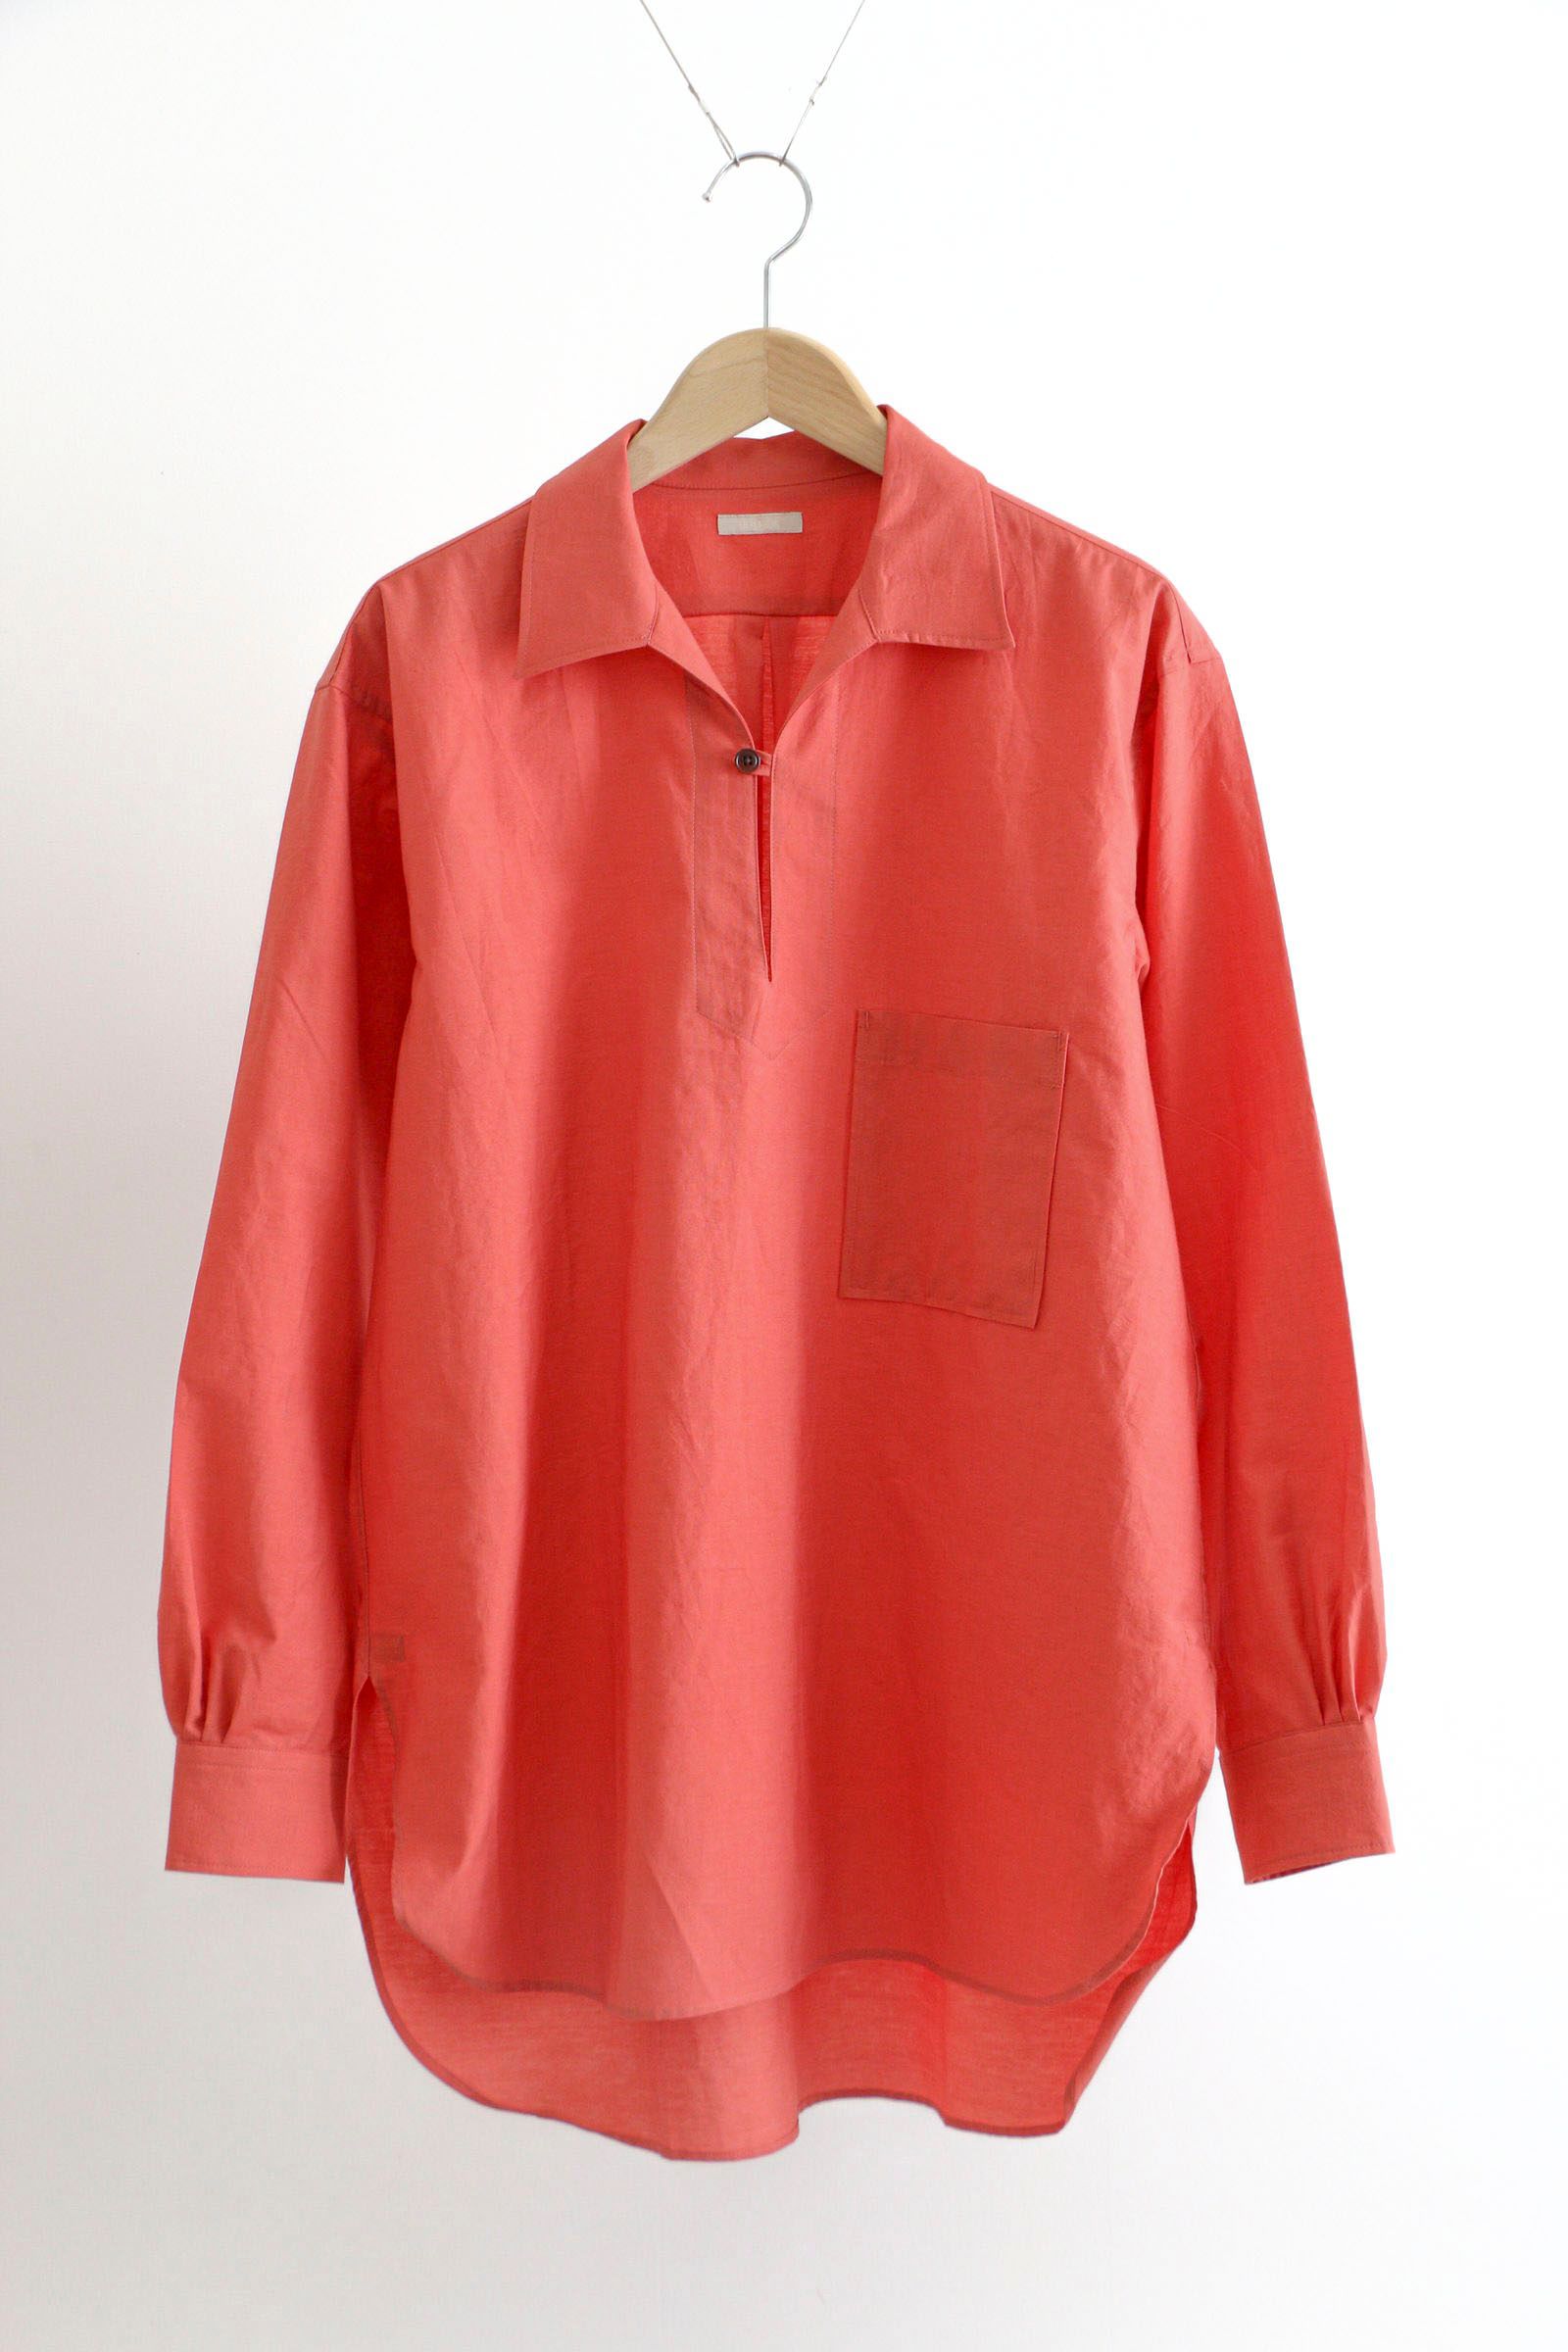 C/S PARACHUTE CLOTH PO SHIRT AKANE RED / レッド / プルオーバーシャツ / スキッパーシャツ - 3